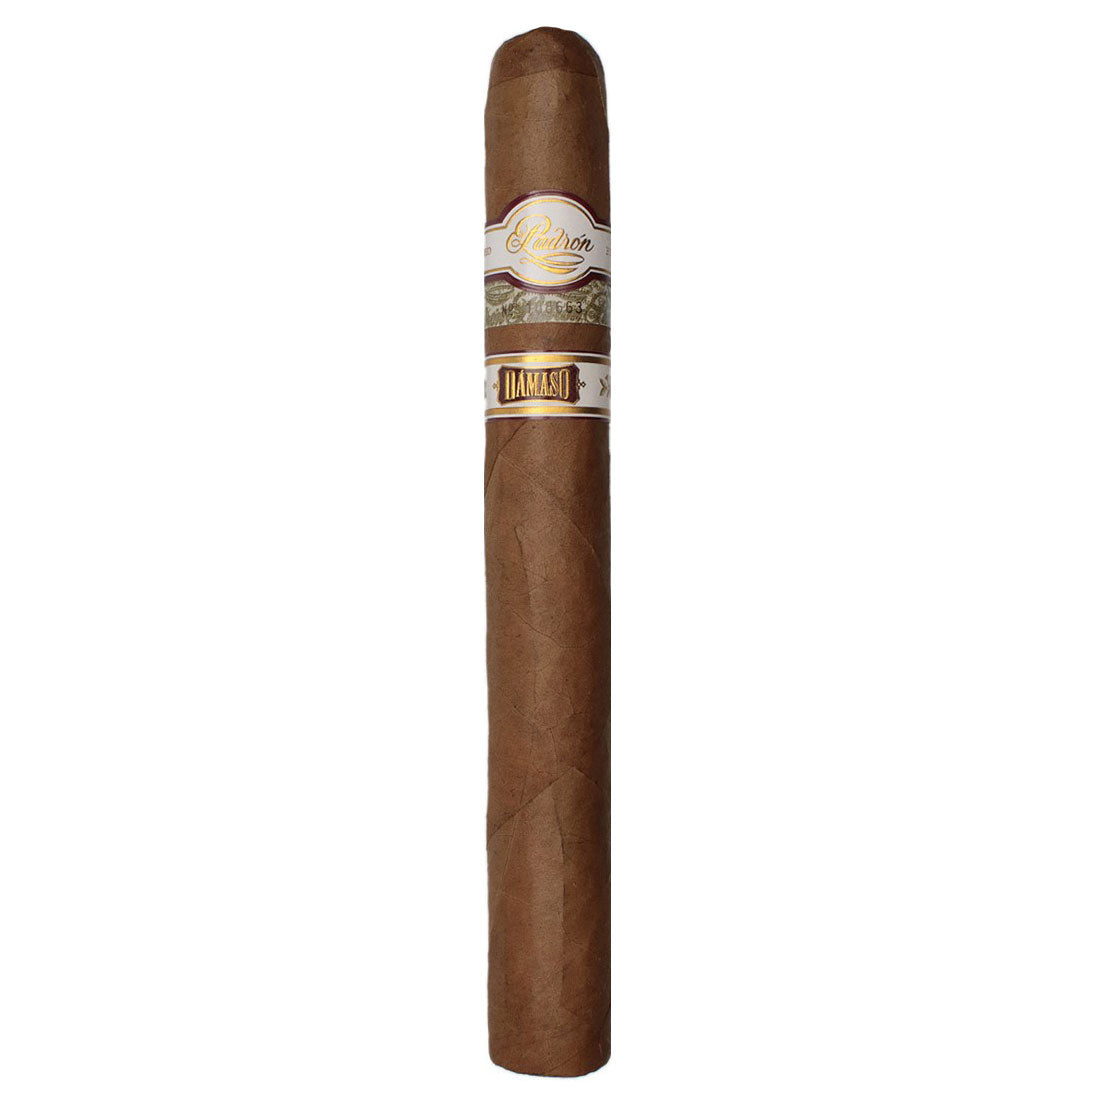 Padron Damaso No.17 Churchill 7 x 54 Single Cigar